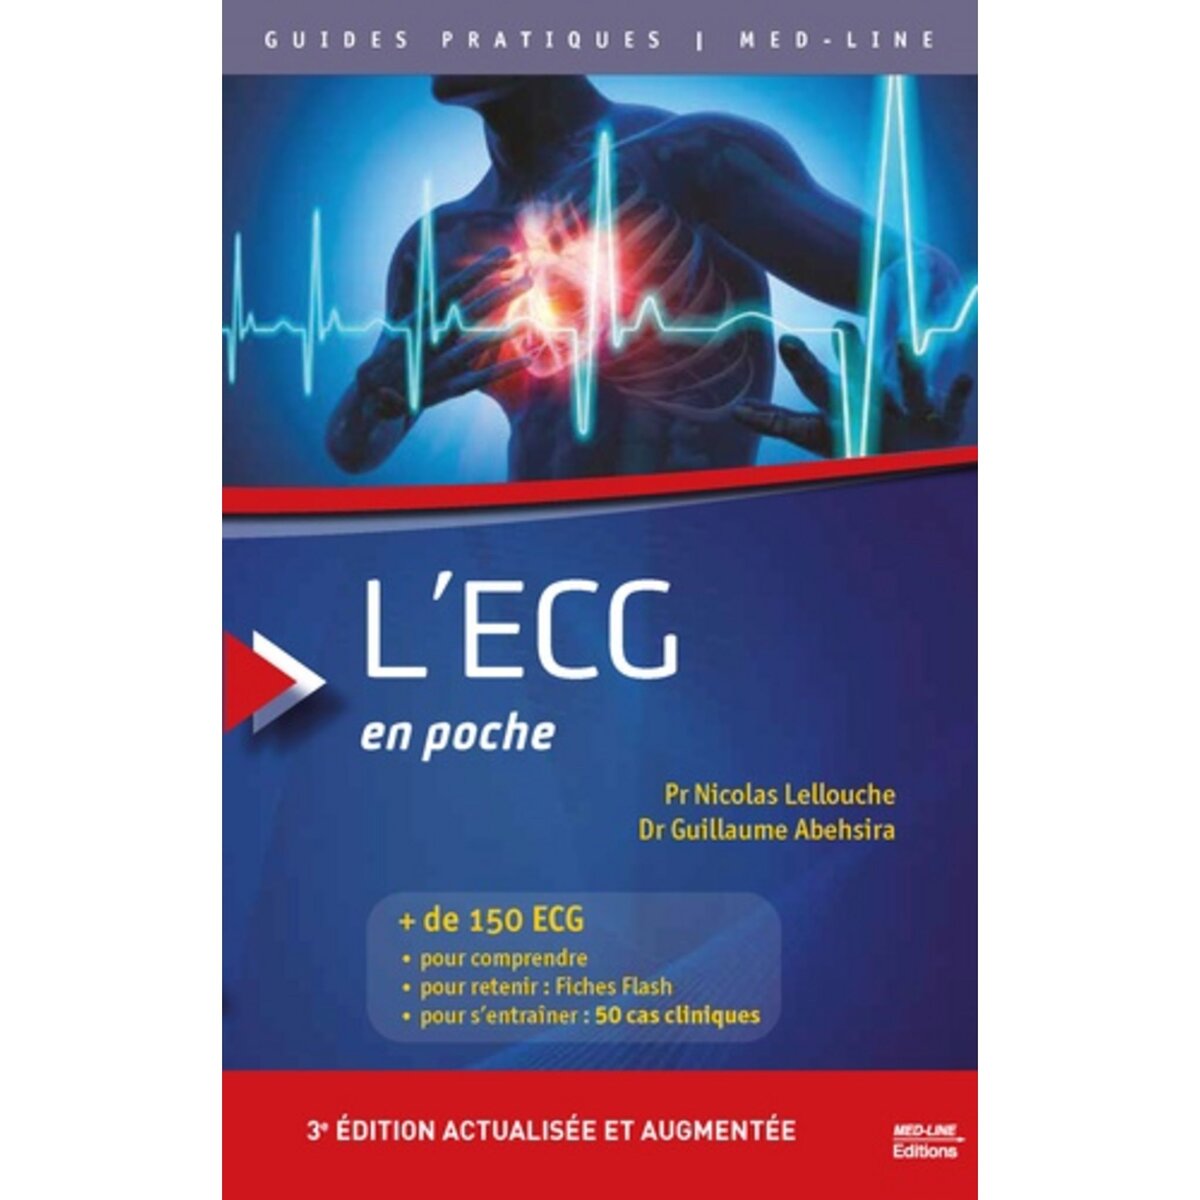  L'ECG EN POCHE. 3E EDITION REVUE ET AUGMENTEE, Lellouche Nicolas